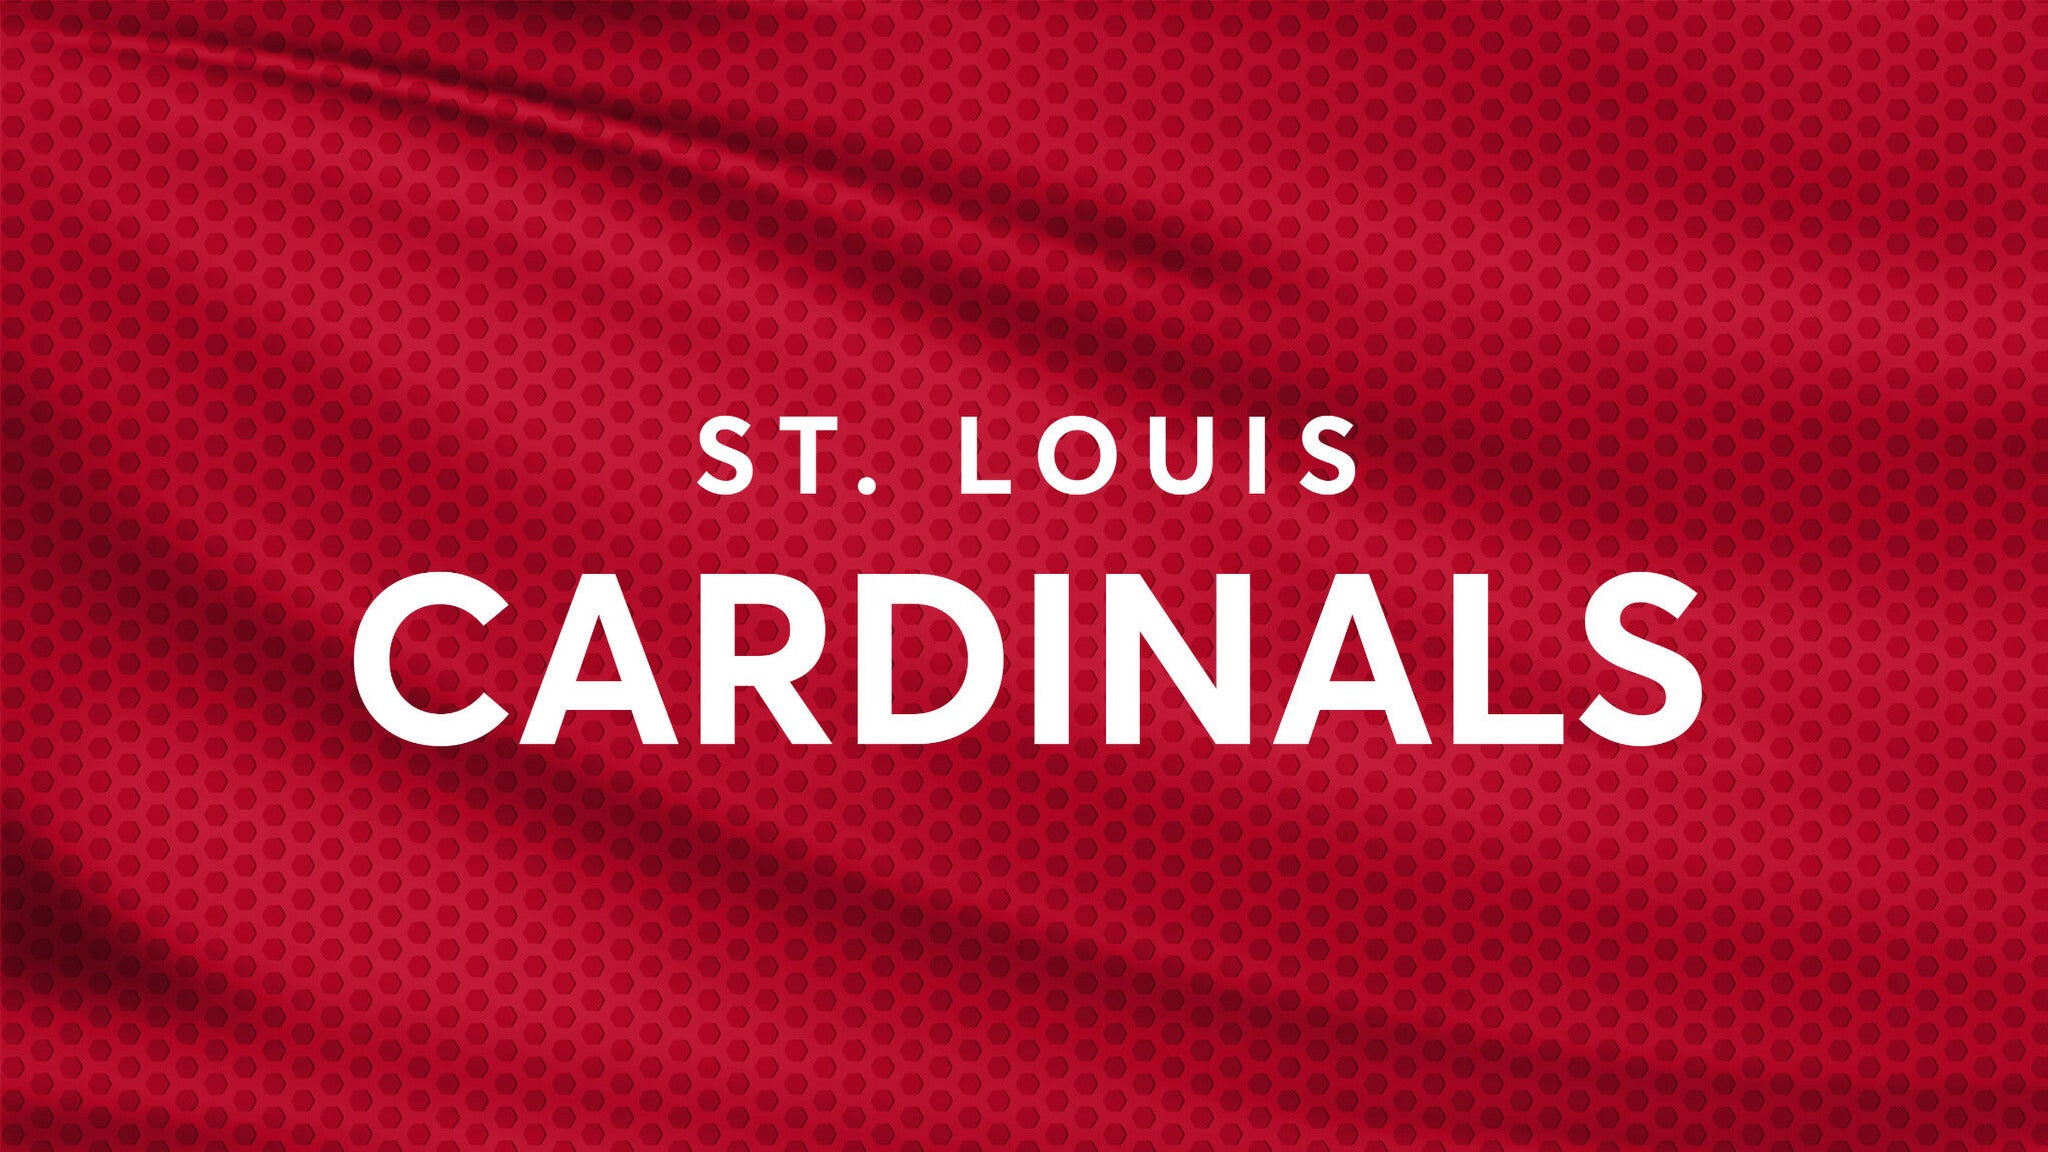 St. Louis Cardinals Parking Tickets | Event Dates & Schedule | www.waldenwongart.com